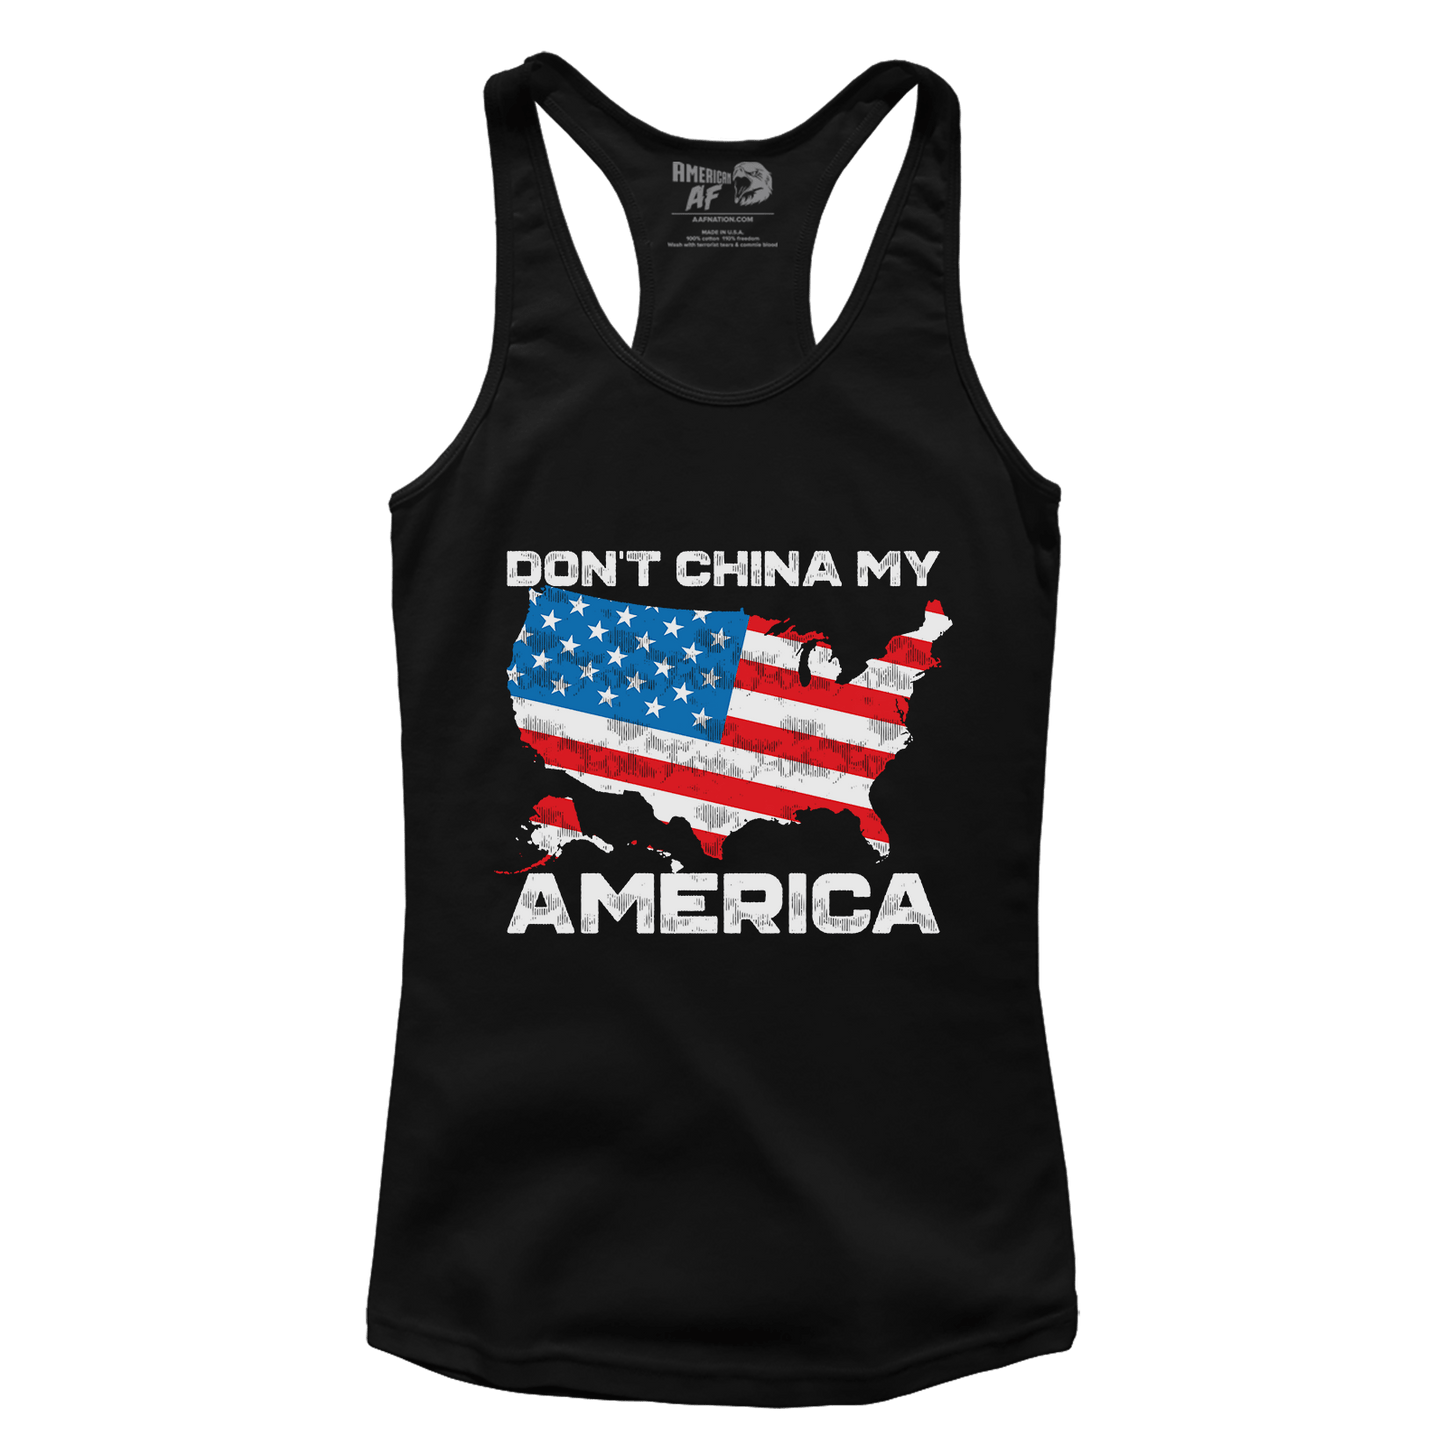 Don't China My America (Ladies)